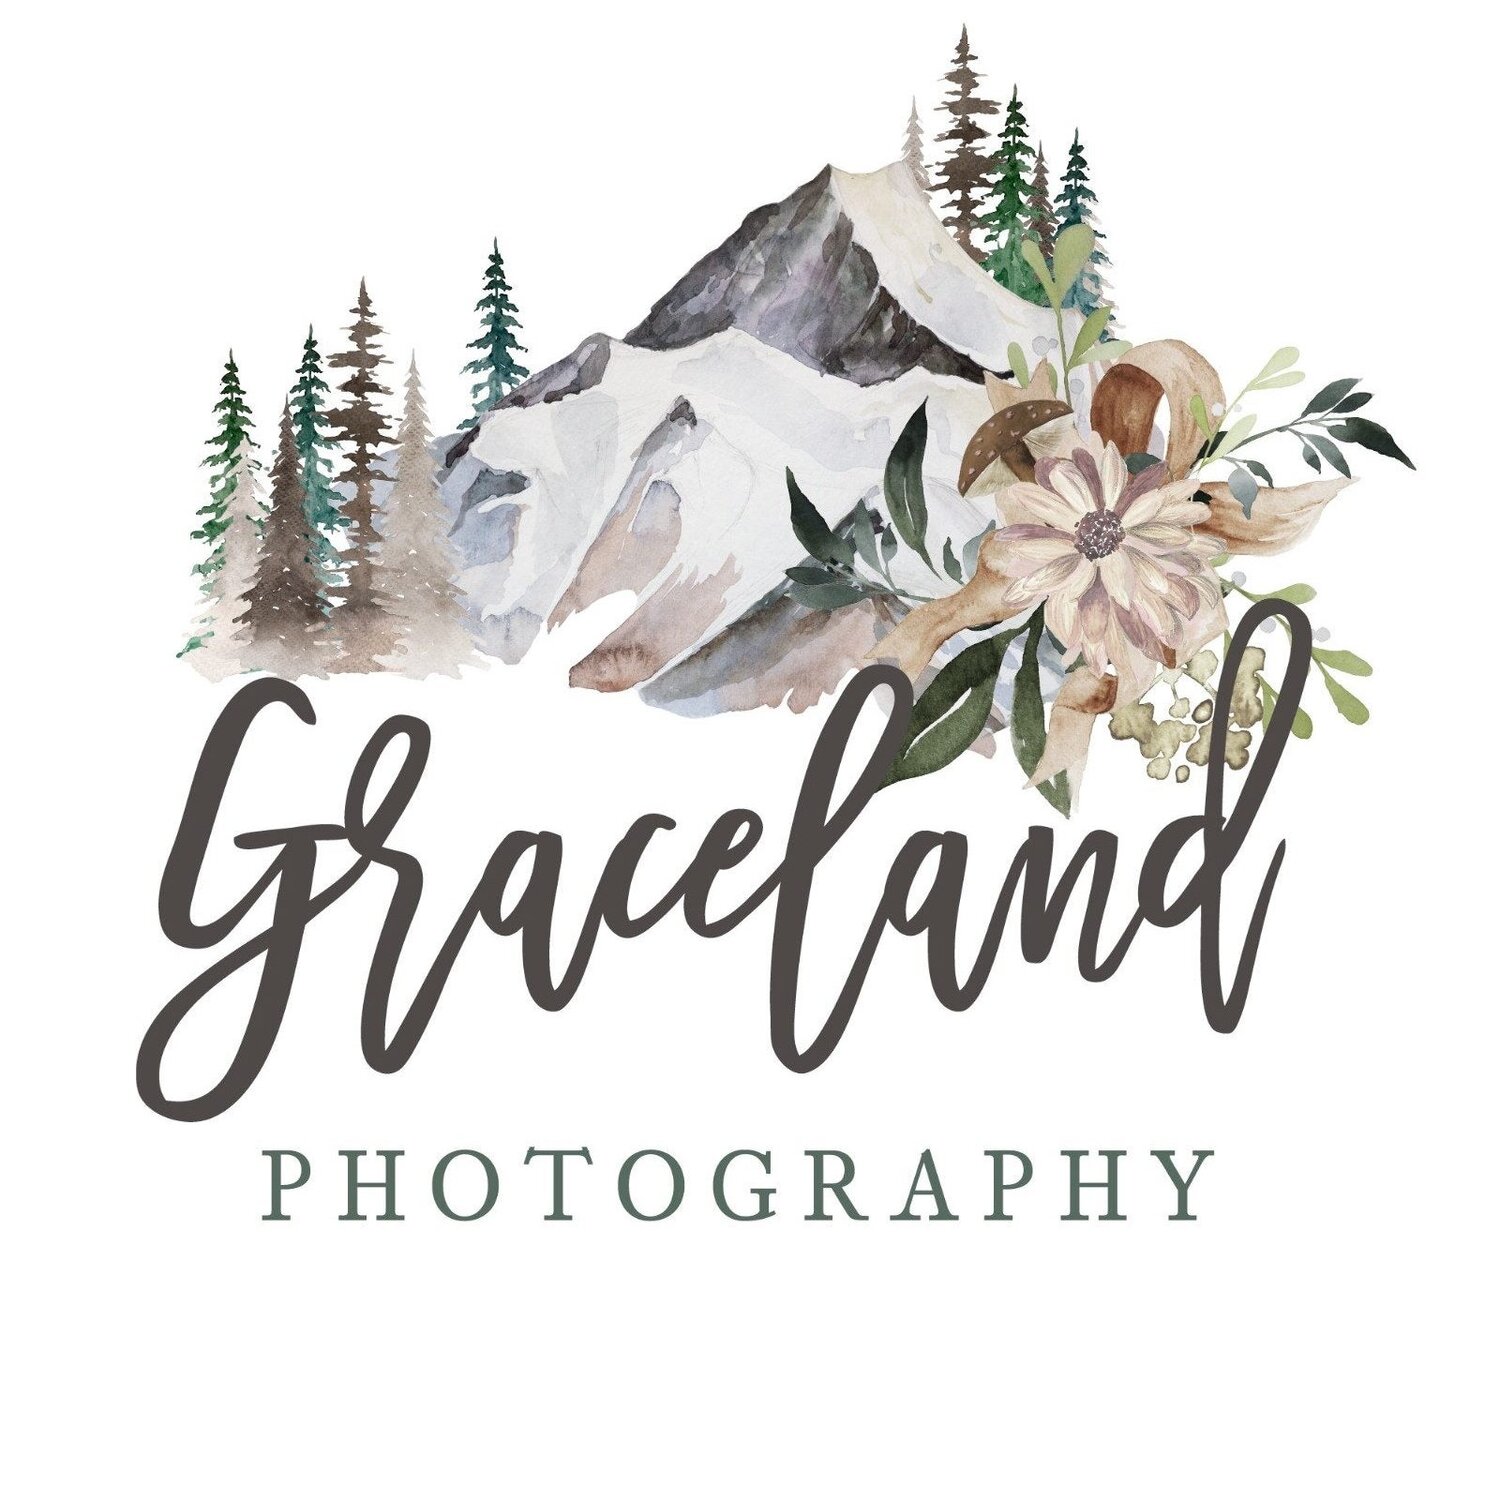 Graceland Photography